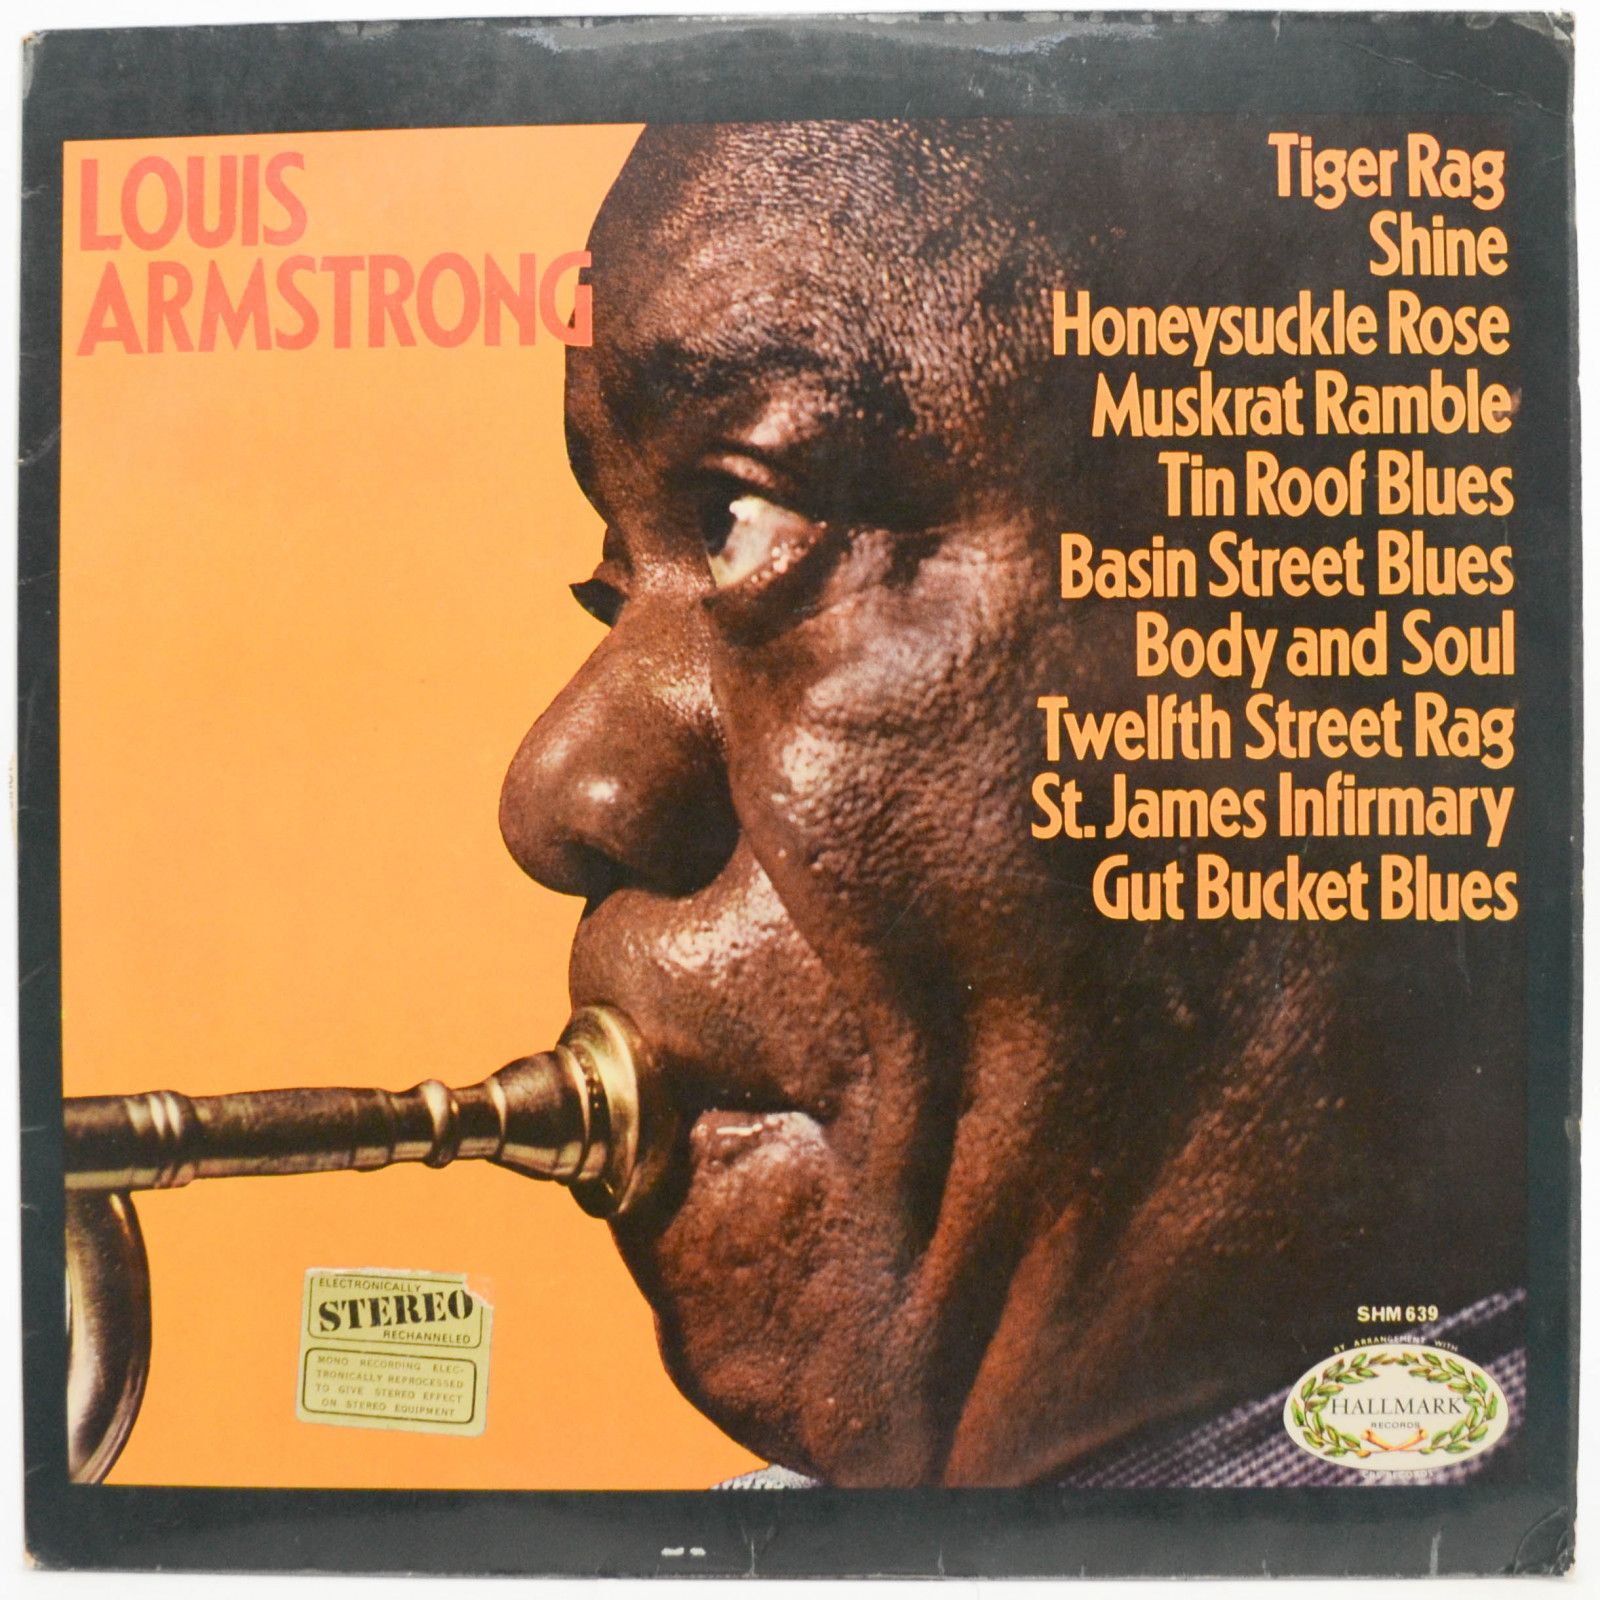 Louis Armstrong — Louis Armstrong (UK), 1969